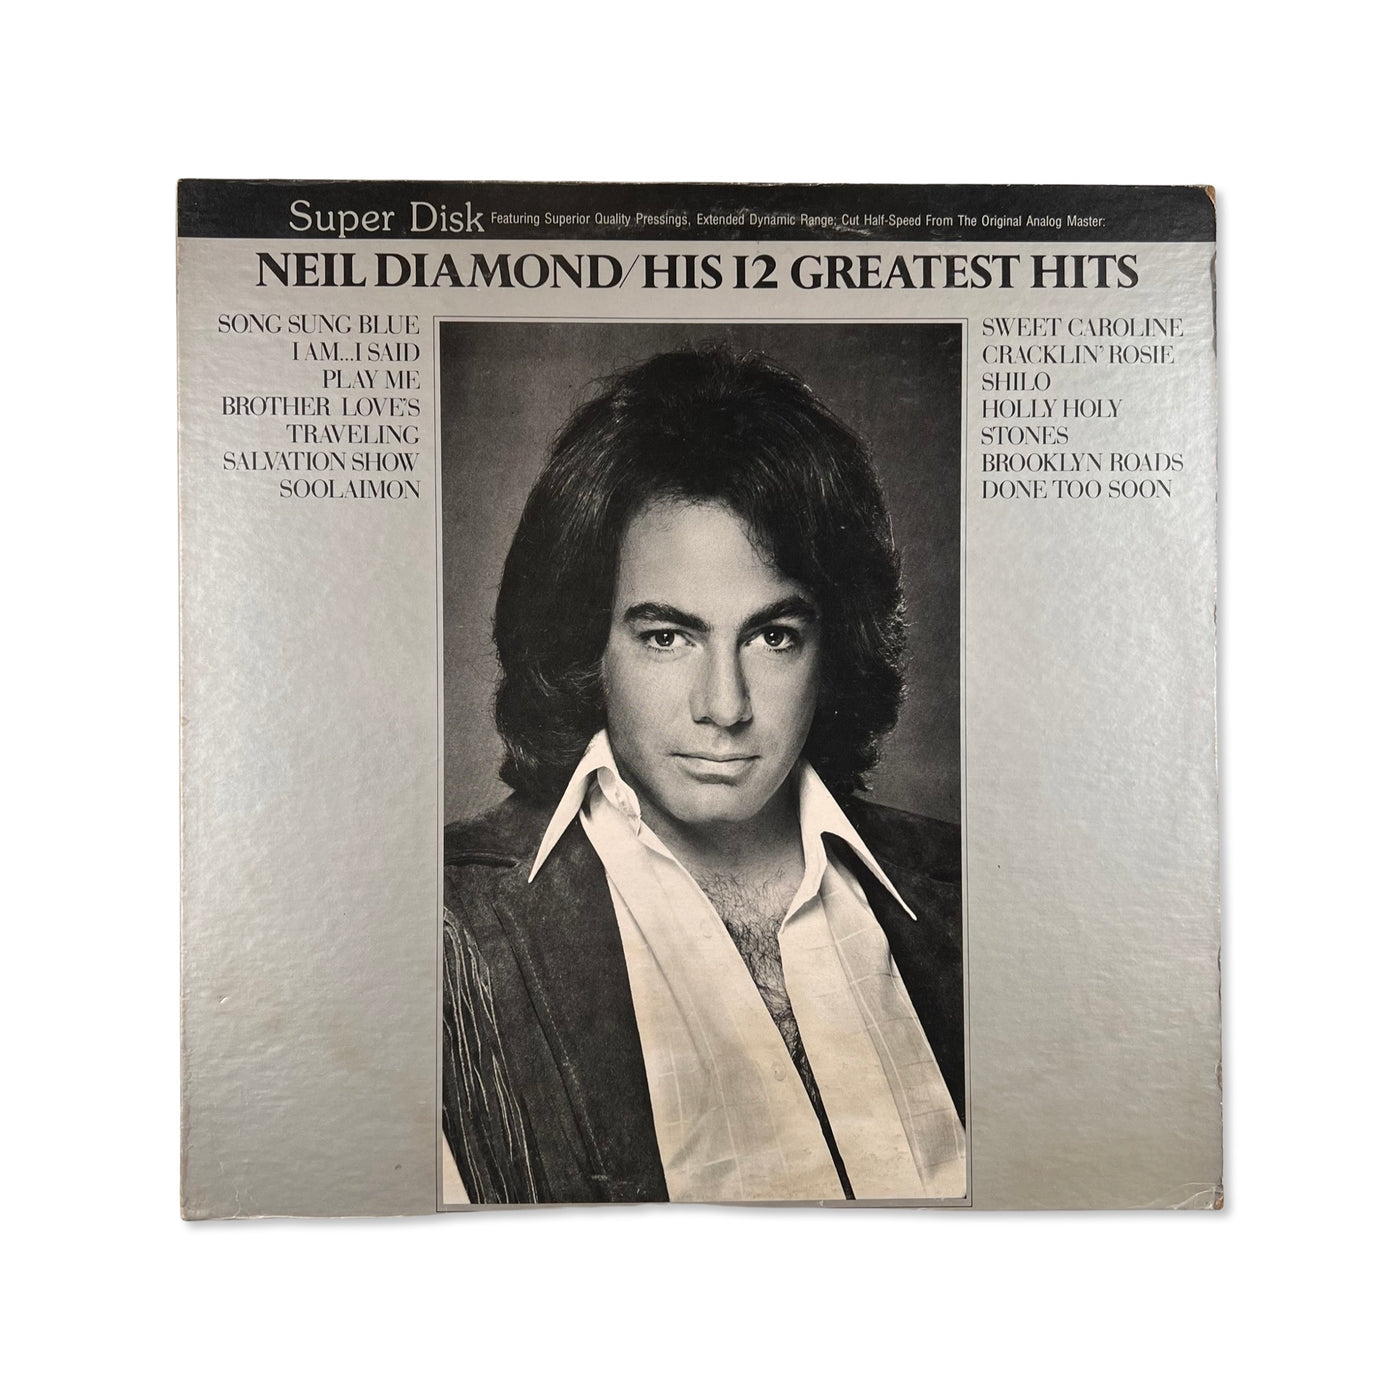 Neil Diamond – His 12 Greatest Hits - 1979 Super Disk